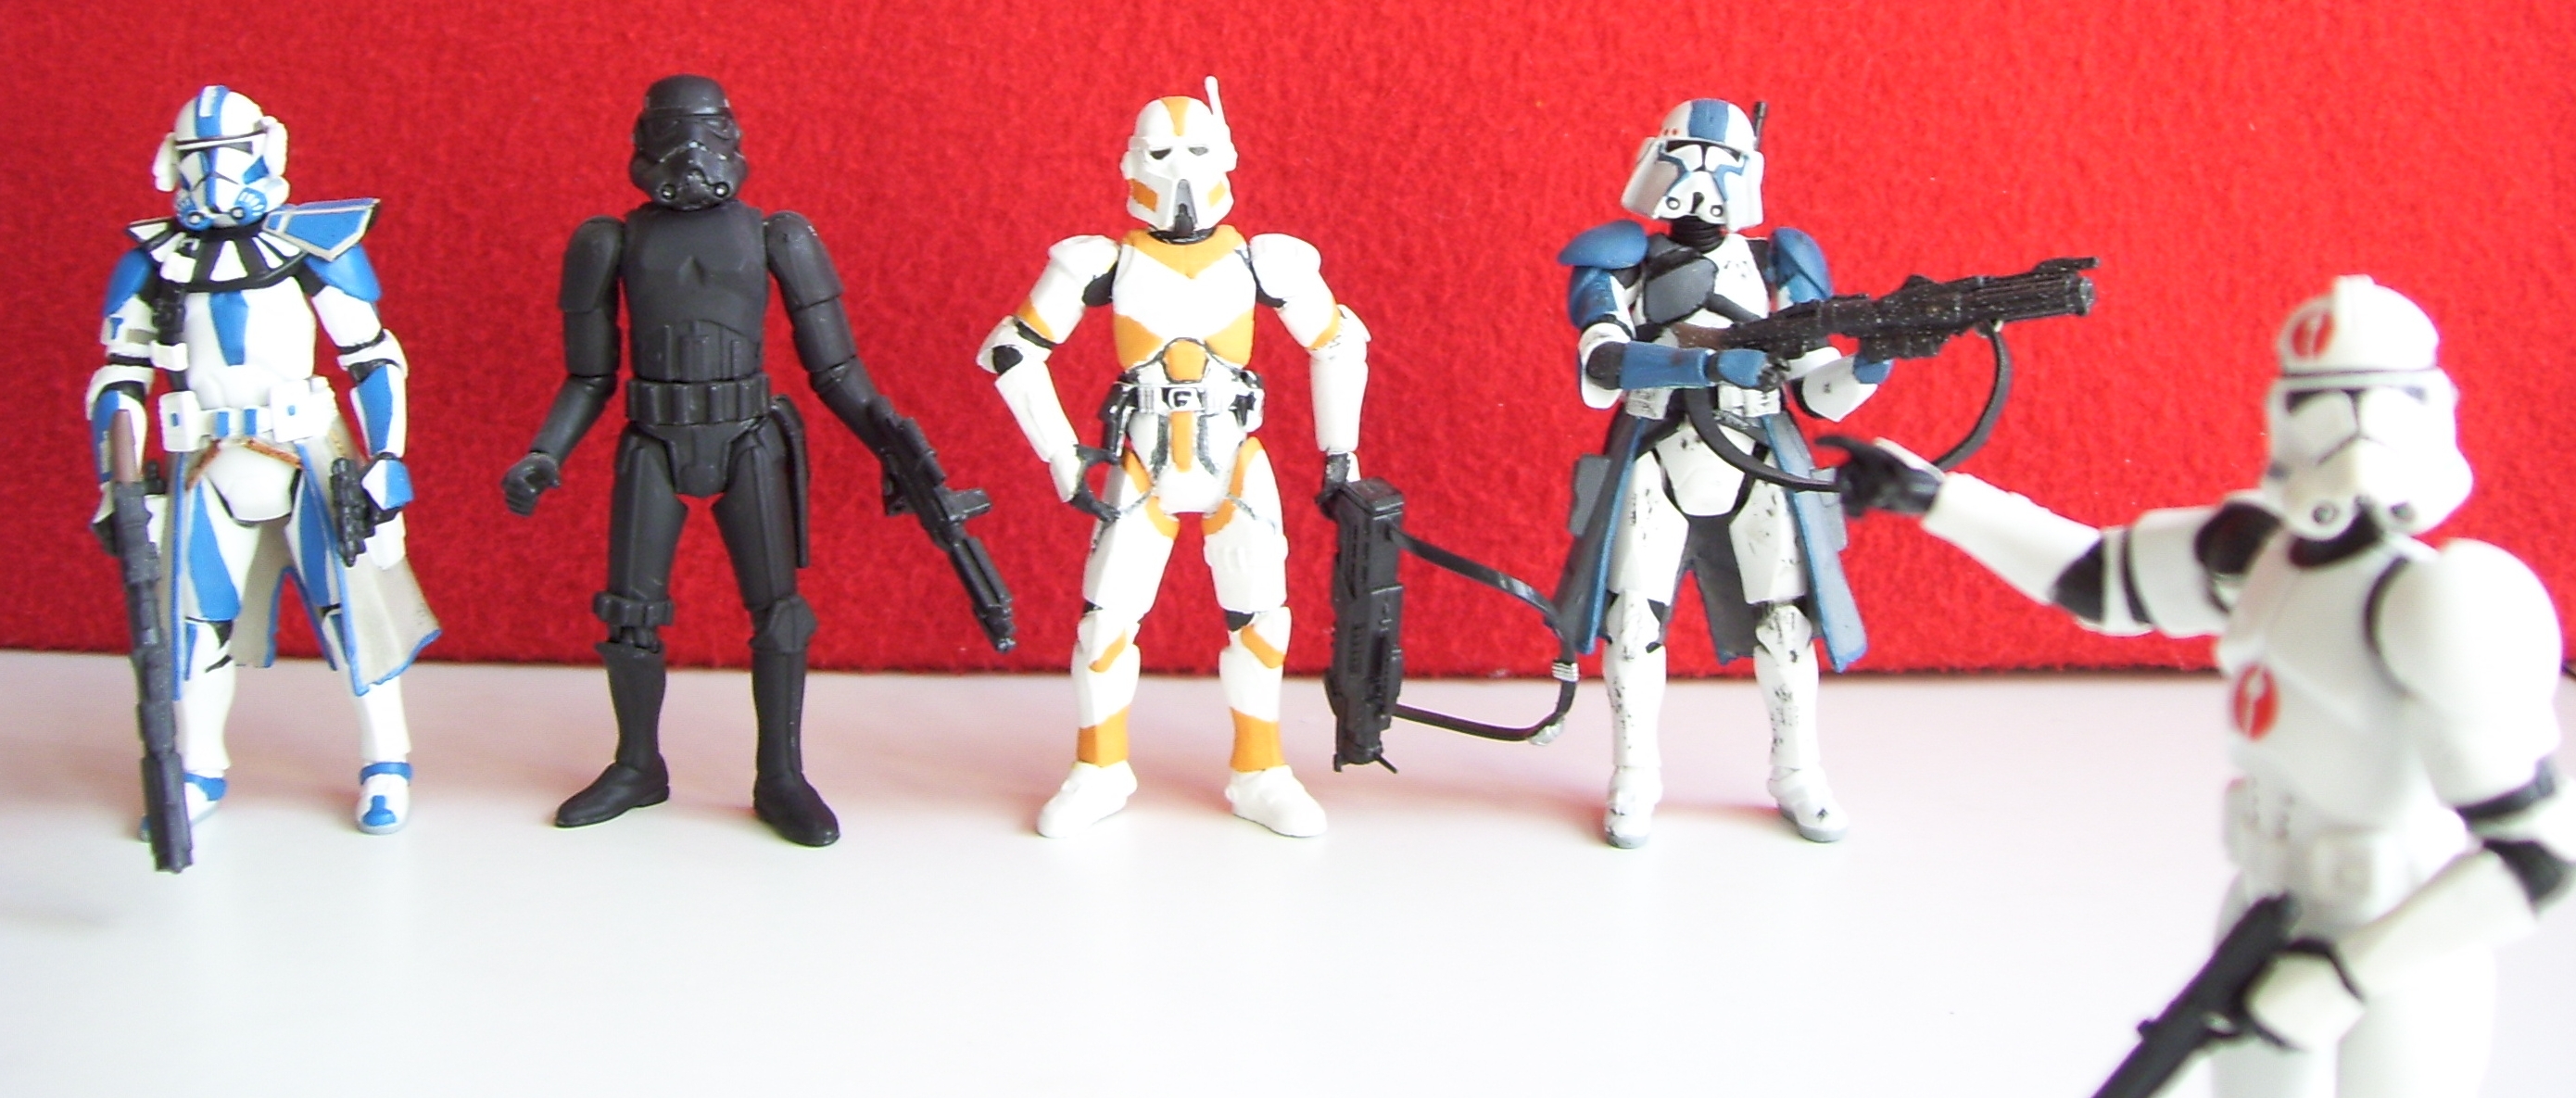 custom figures